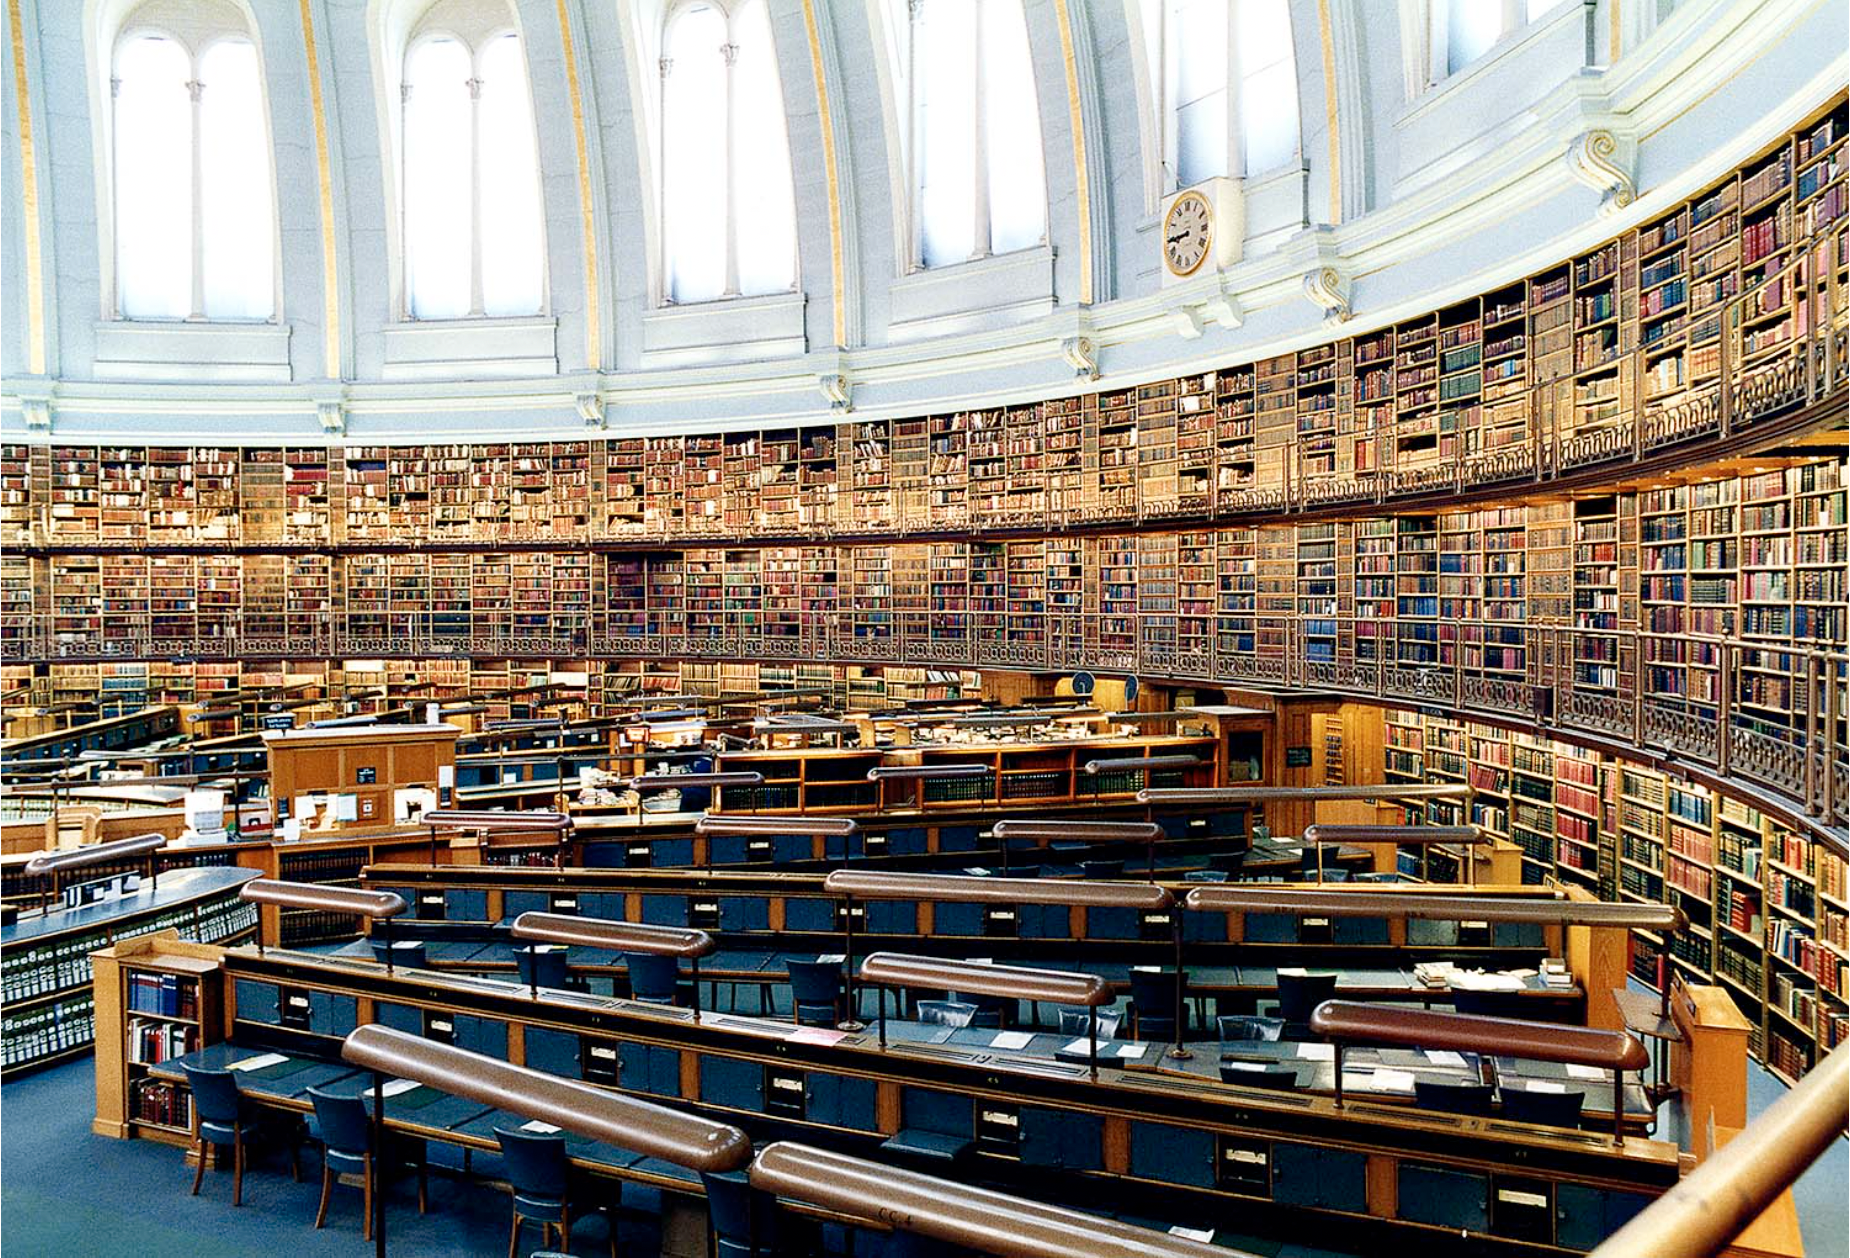 Attachment library. Библиотека британского музея в Лондоне. Британский музей Лондон читательный зал. Национальная библиотека Великобритании книгохранилище. Британская библиотека (British Library).